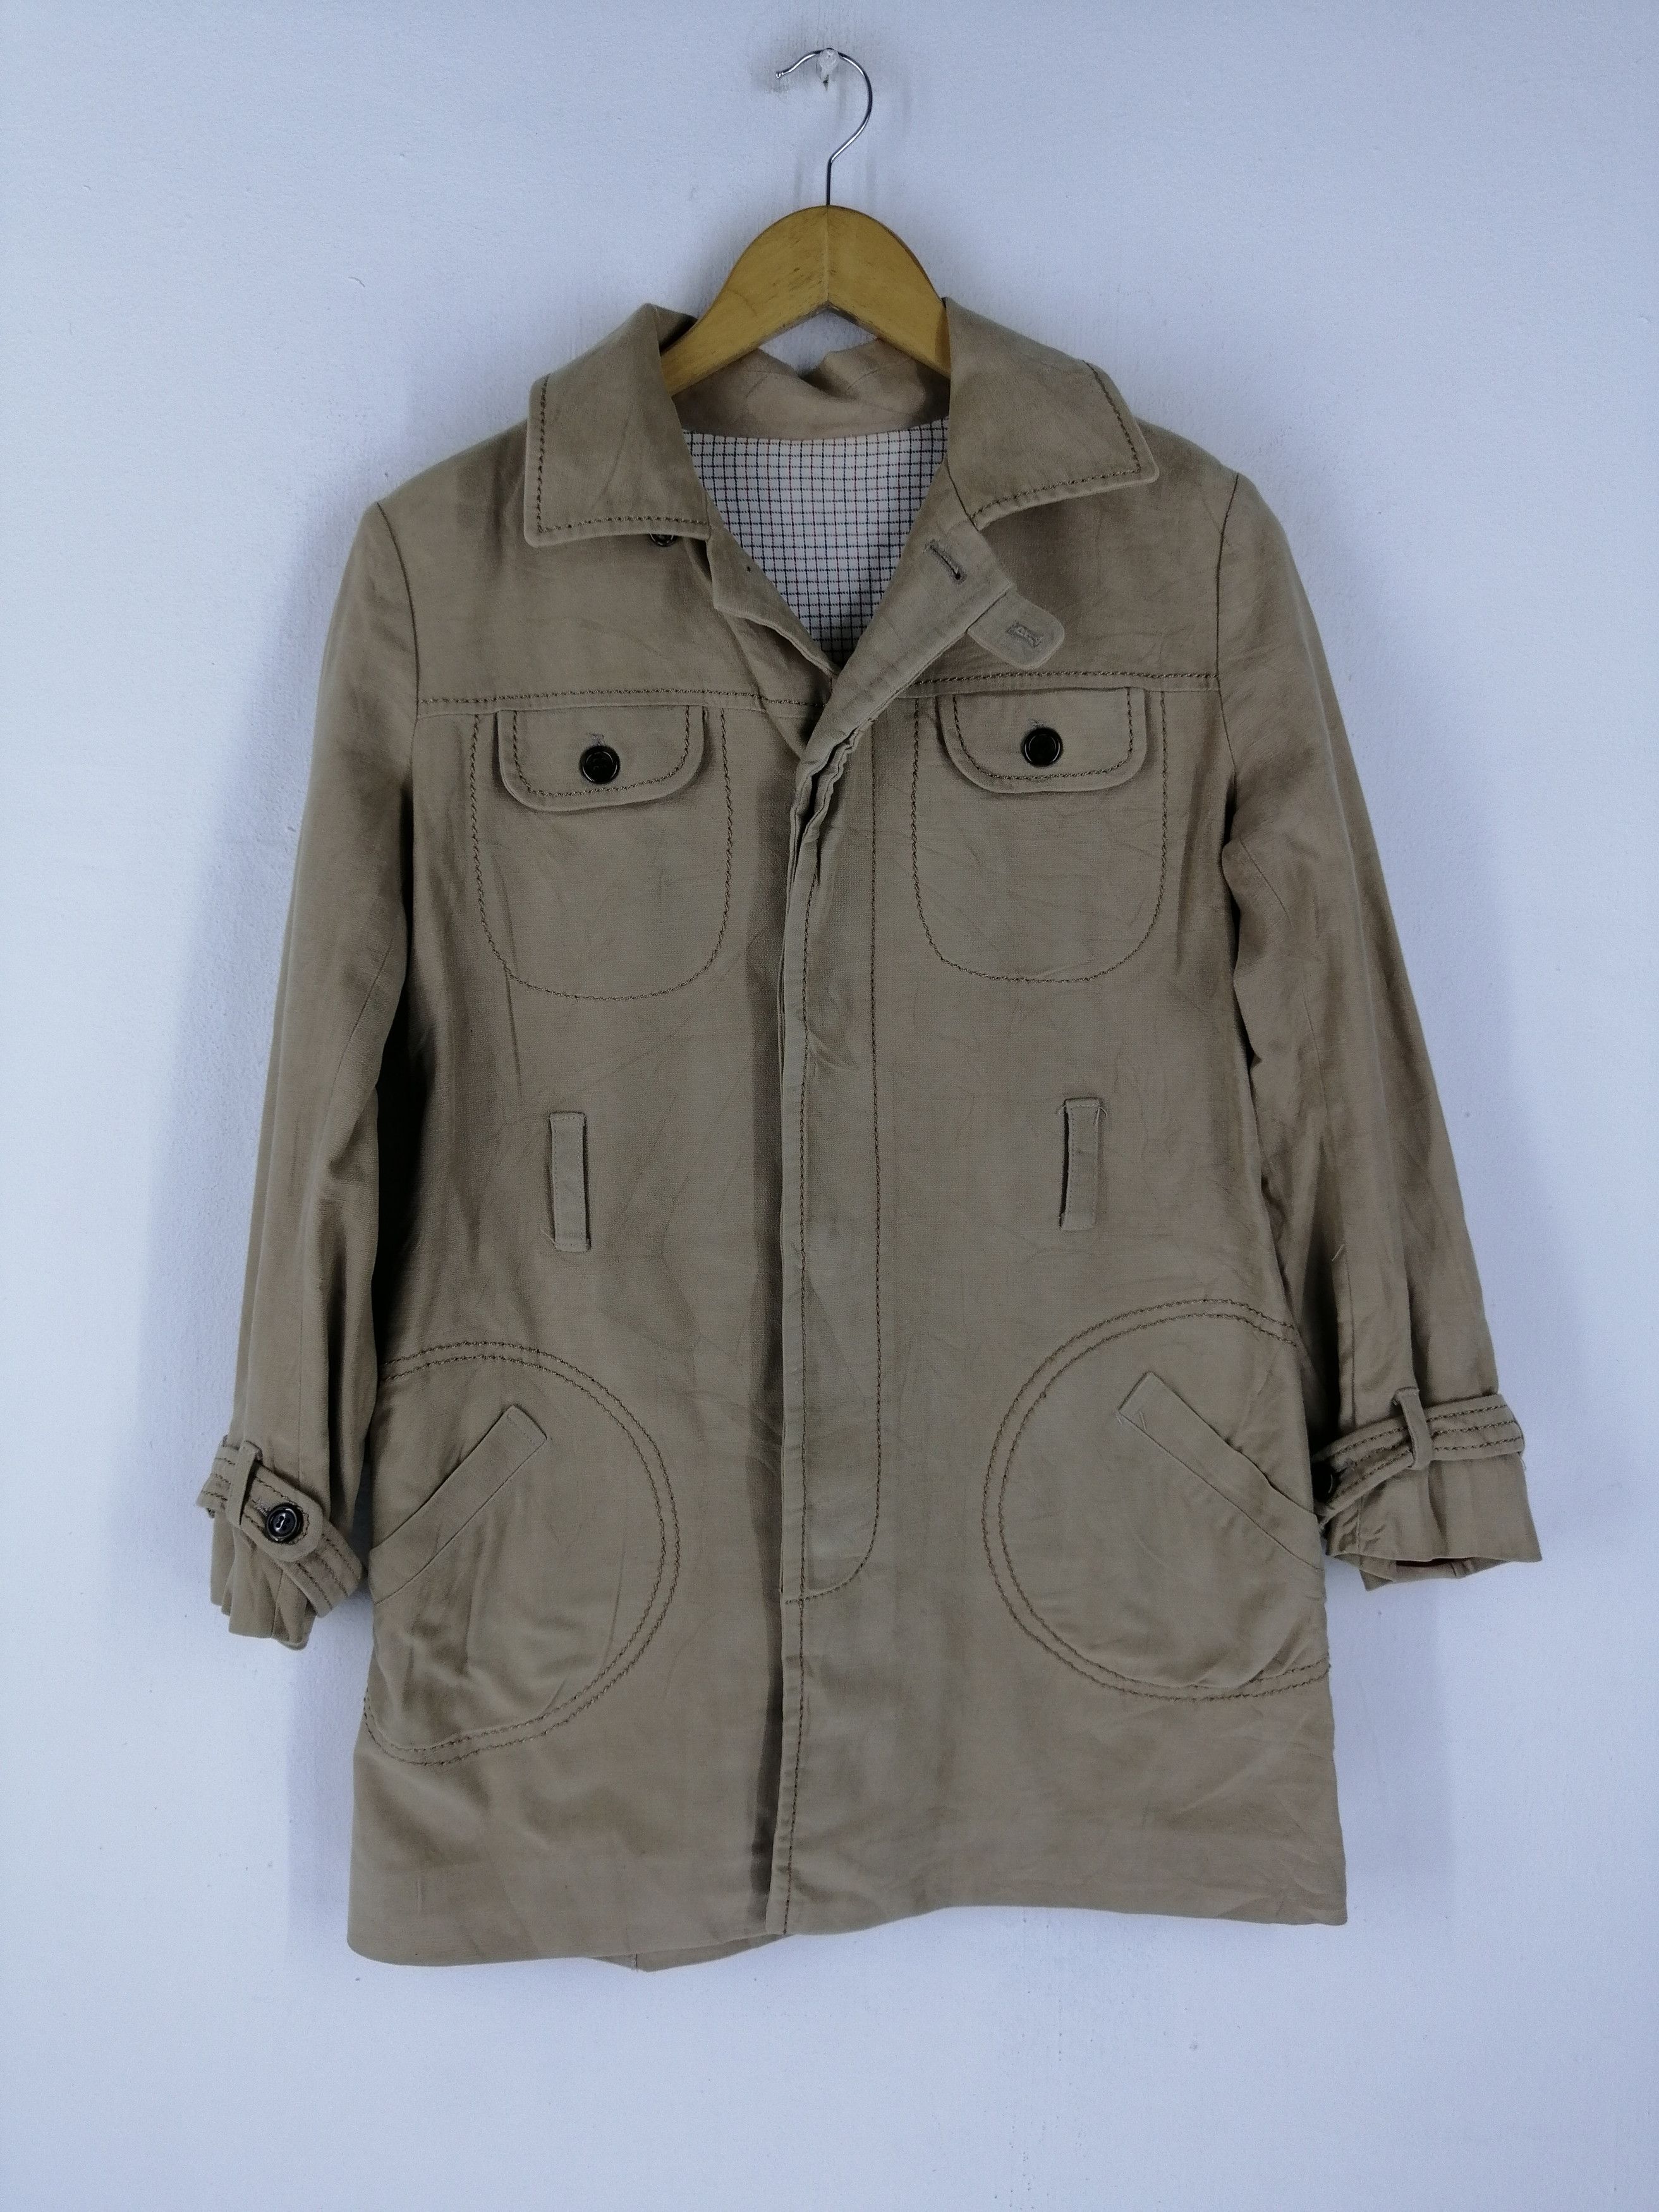 Designer Manual labour x Yoshihiro Nagao jacket Made in Japan | Grailed